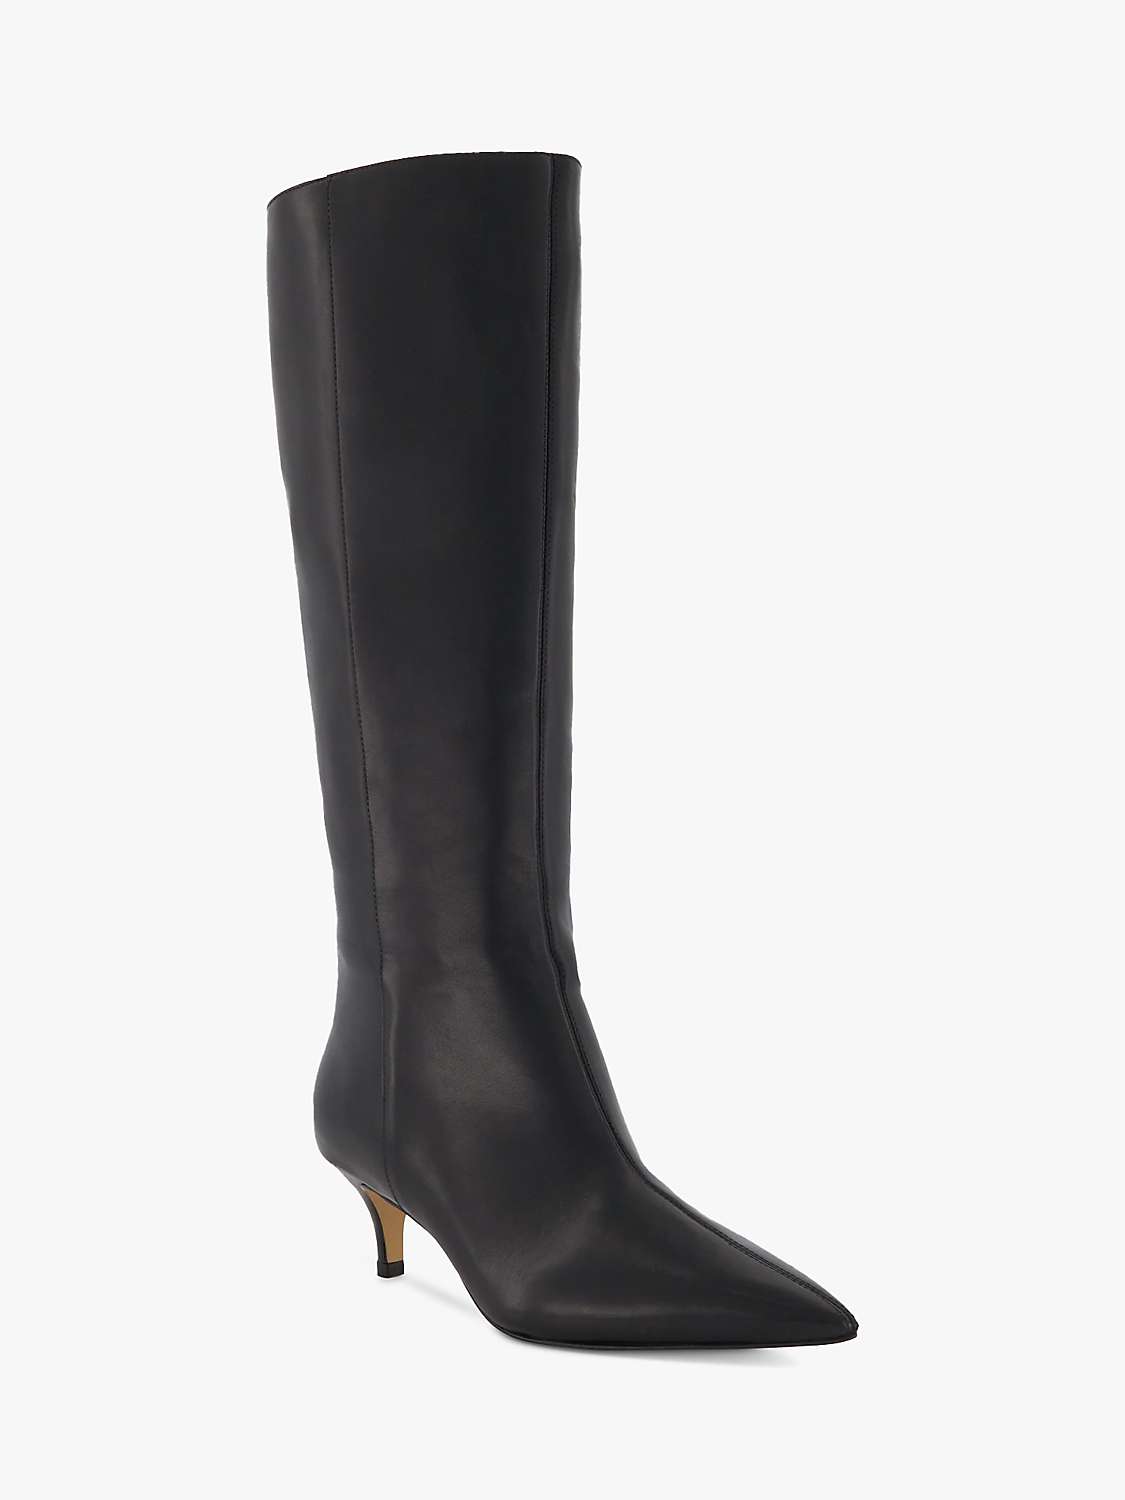 Buy Dune Smooth Leather Kitten Heel Knee High Boots Online at johnlewis.com